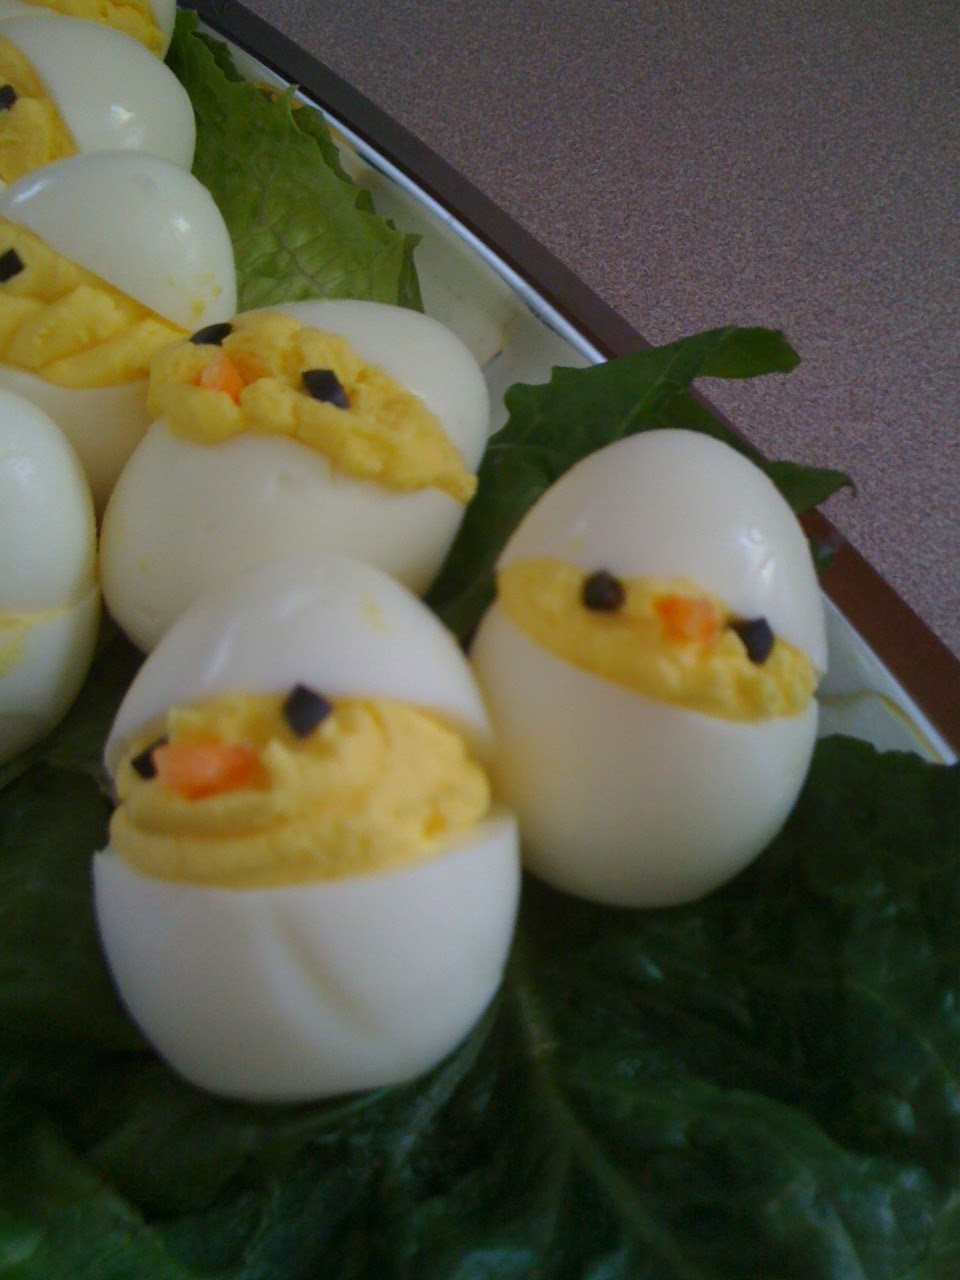 Cute Deviled Eggs For Easter
 Chickadee Deviled Eggs